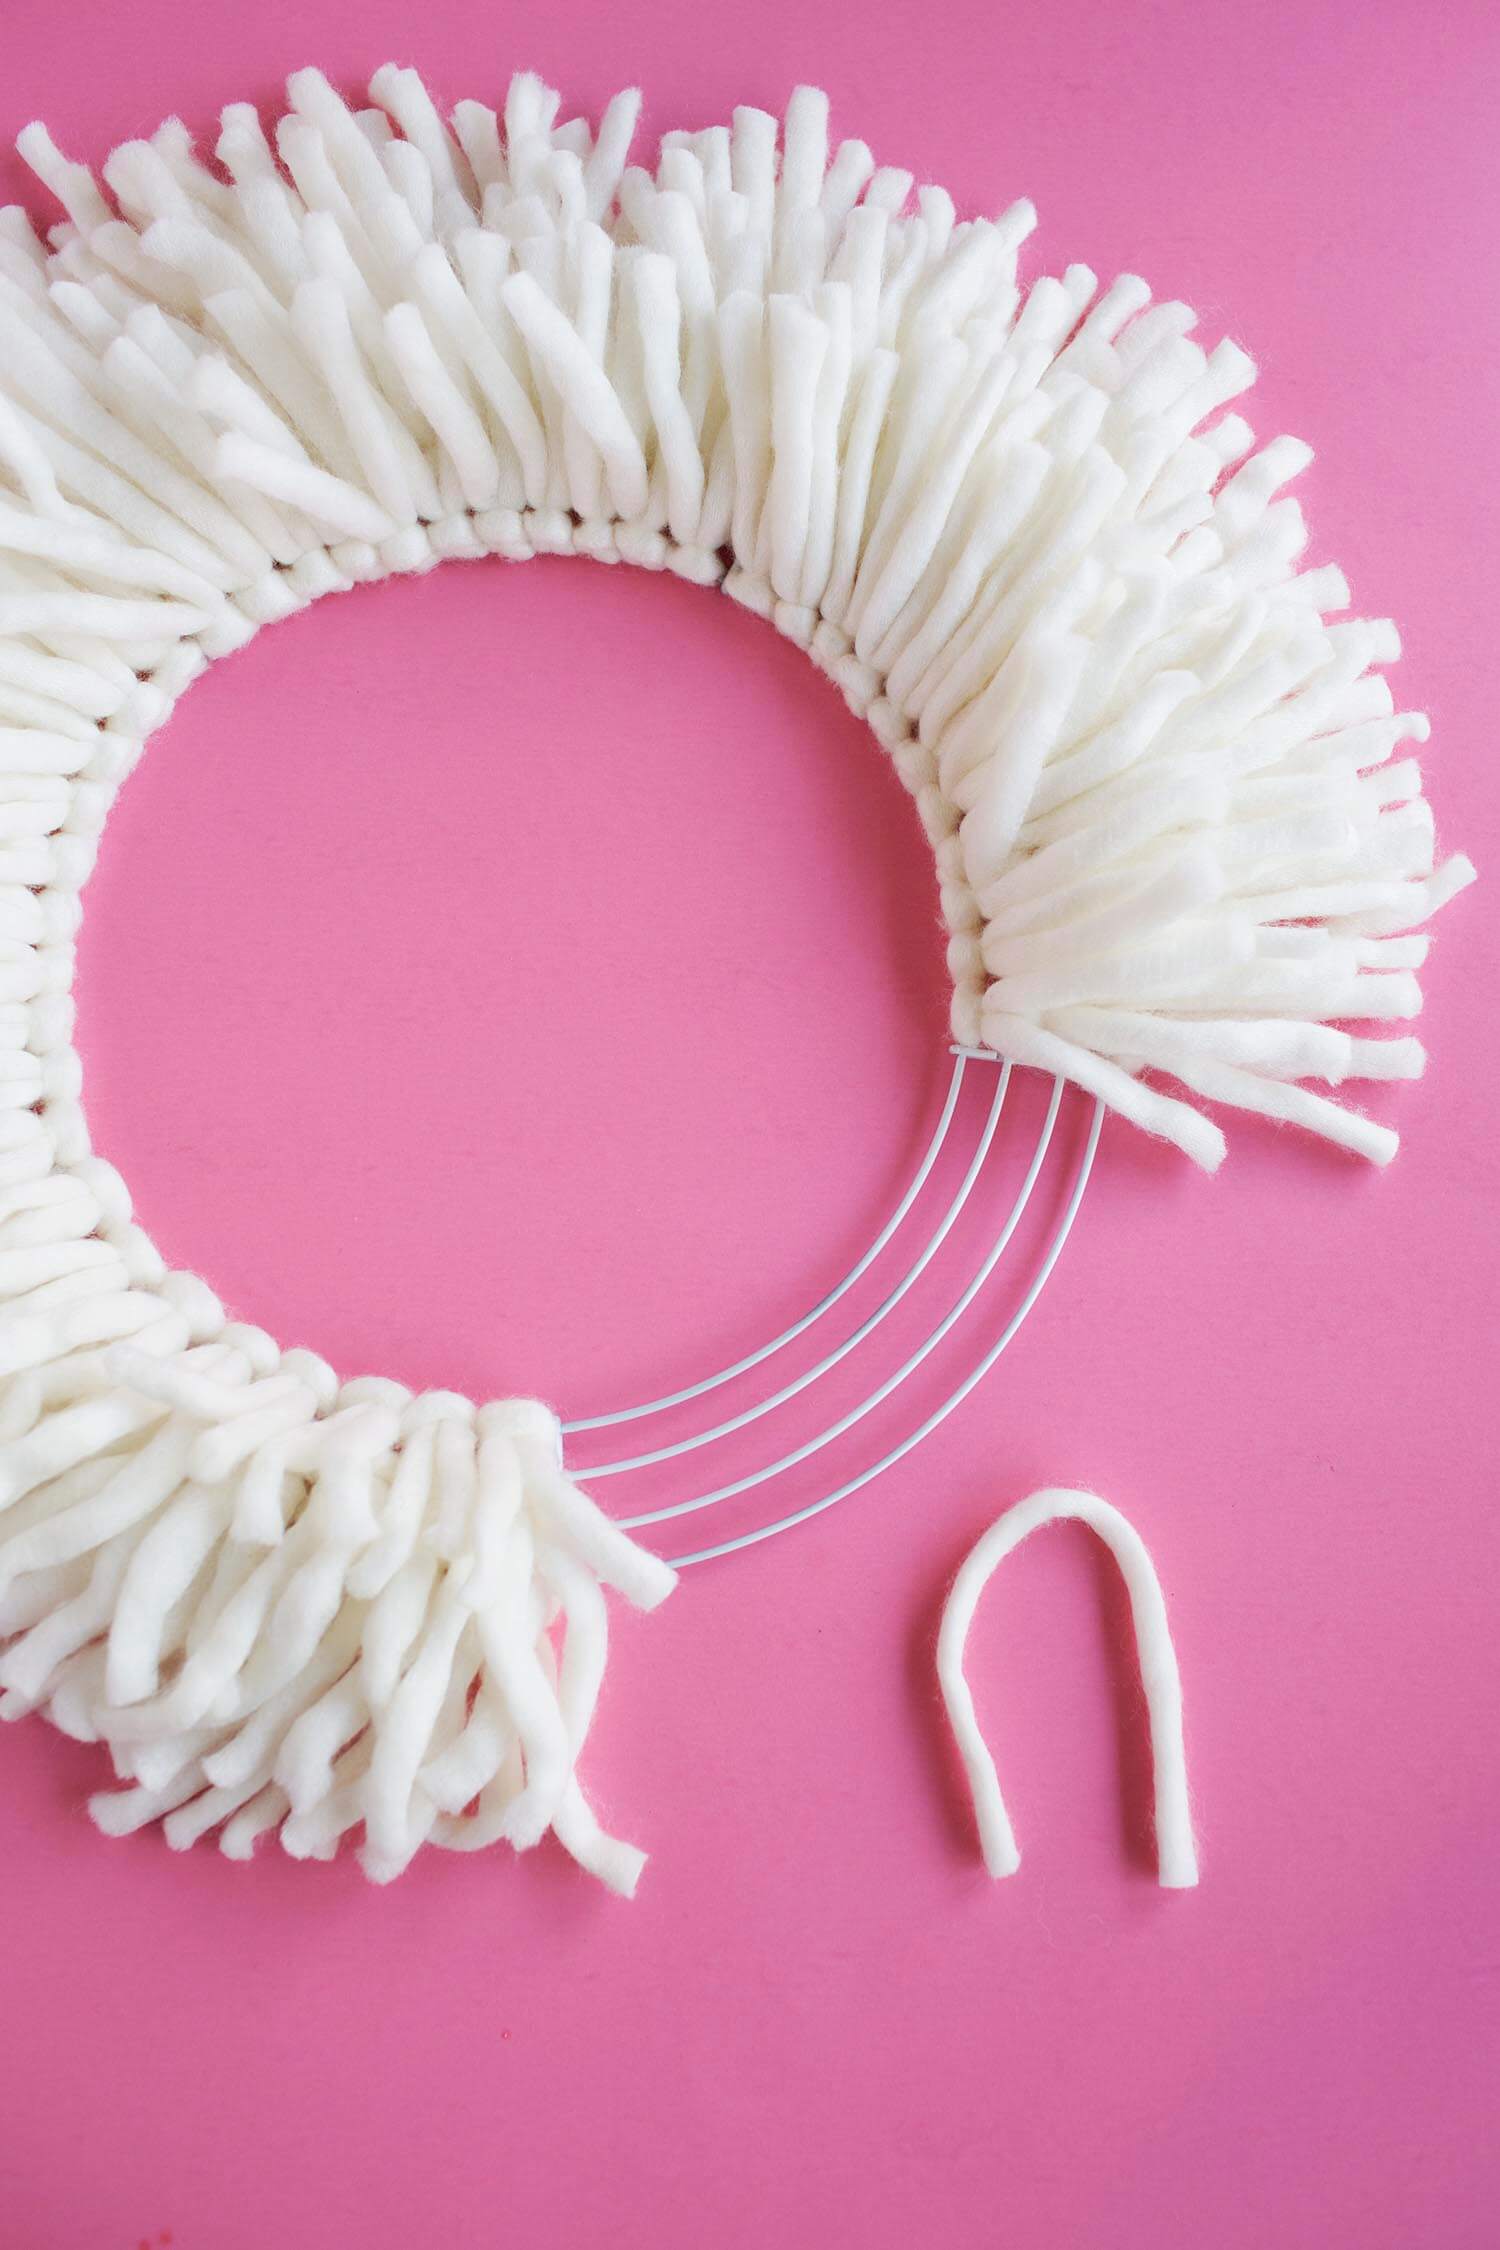 How to make a shaggy yarn wreath